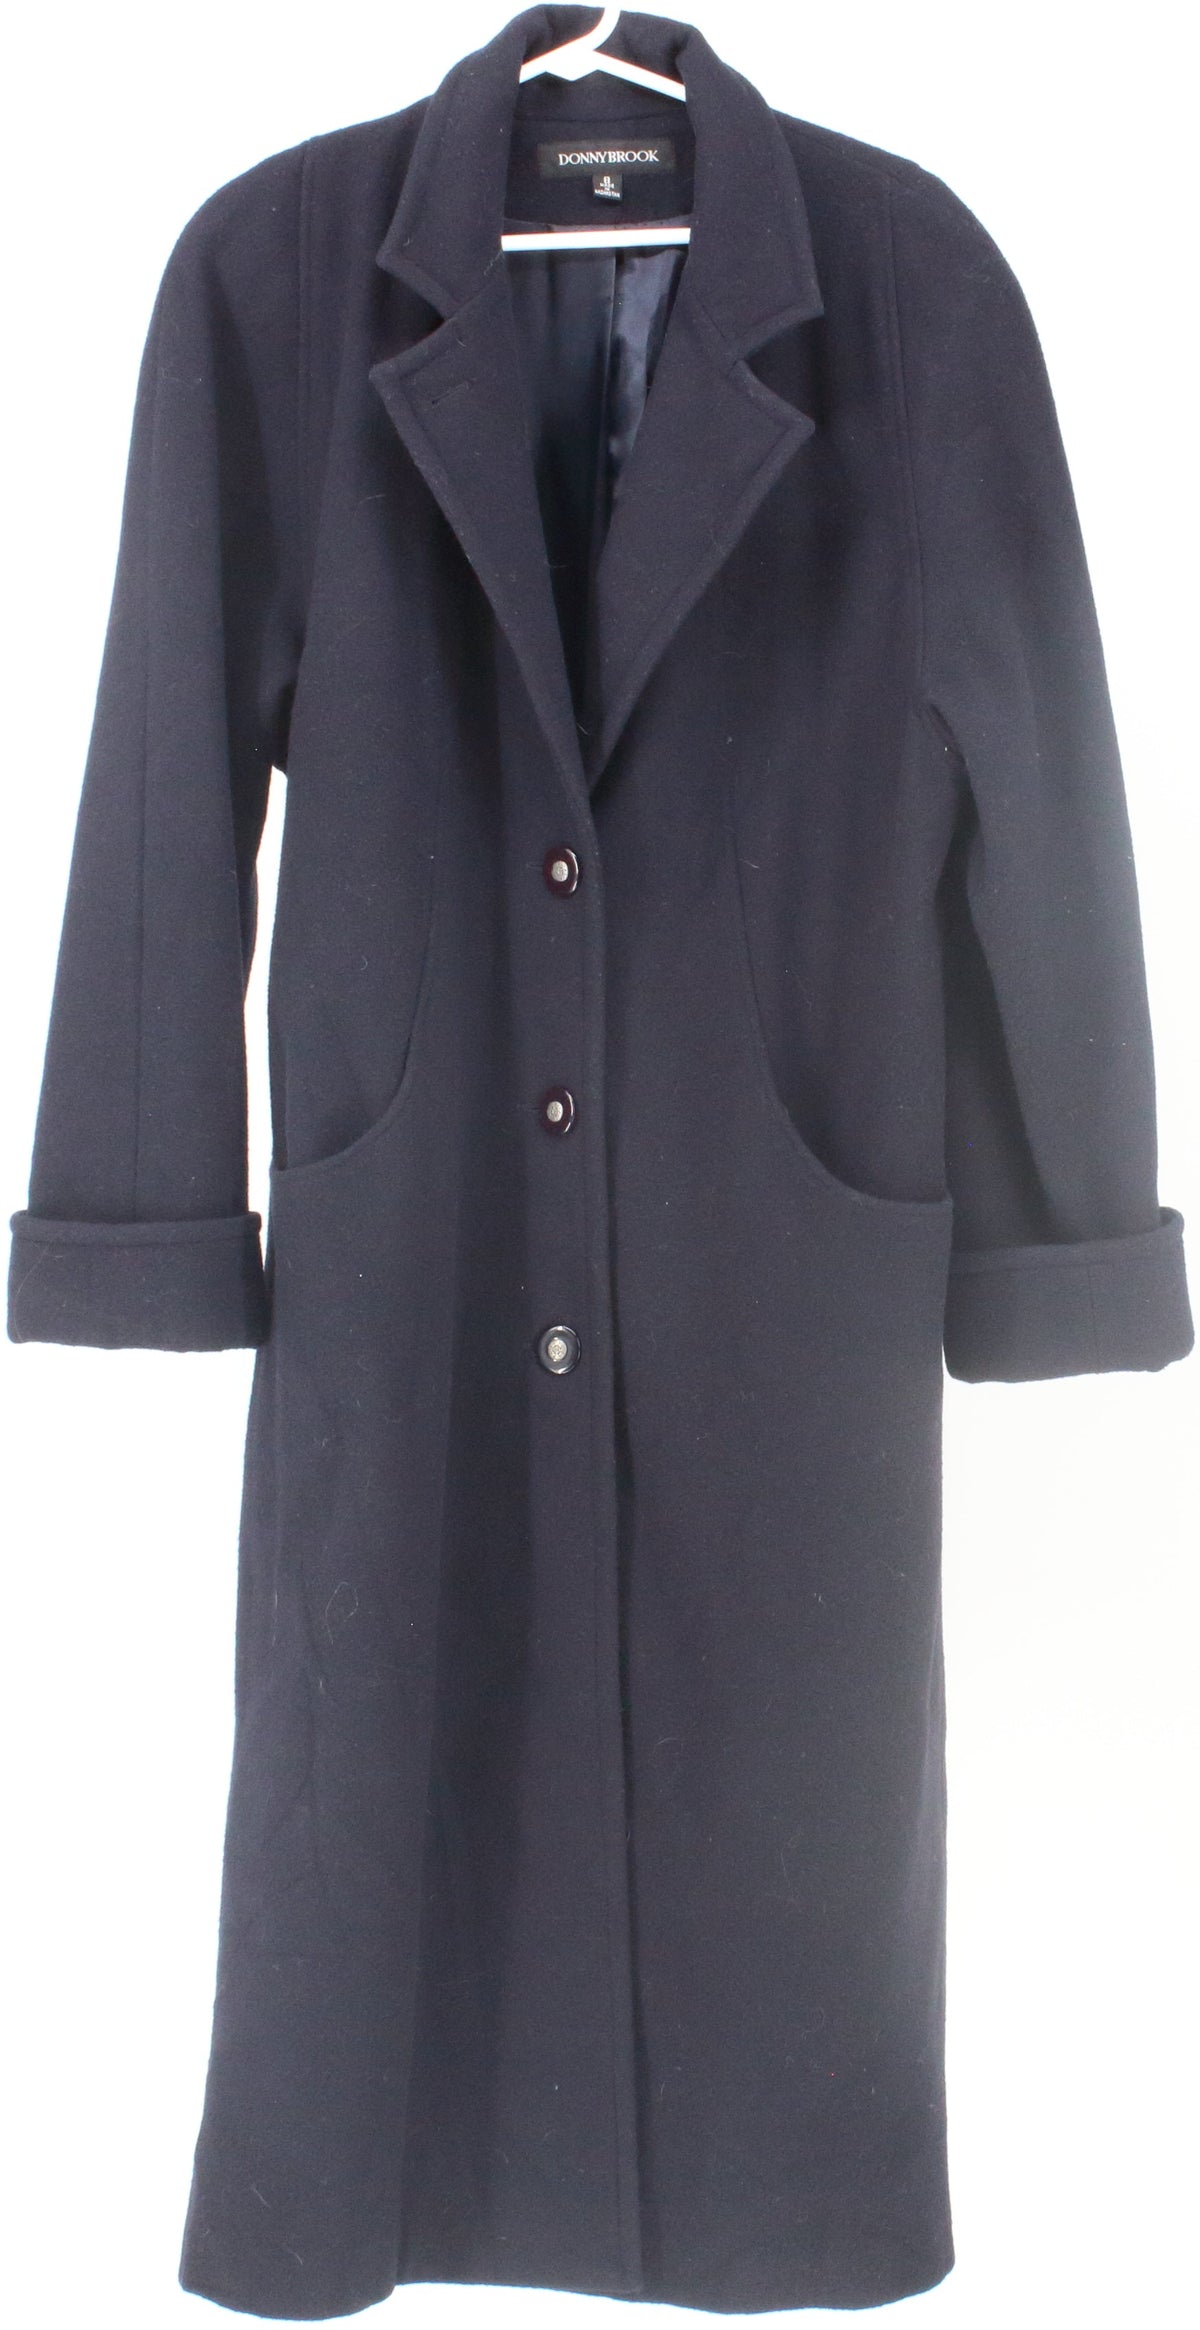 Donny Brook Navy Blue Women's Long Wool Coat